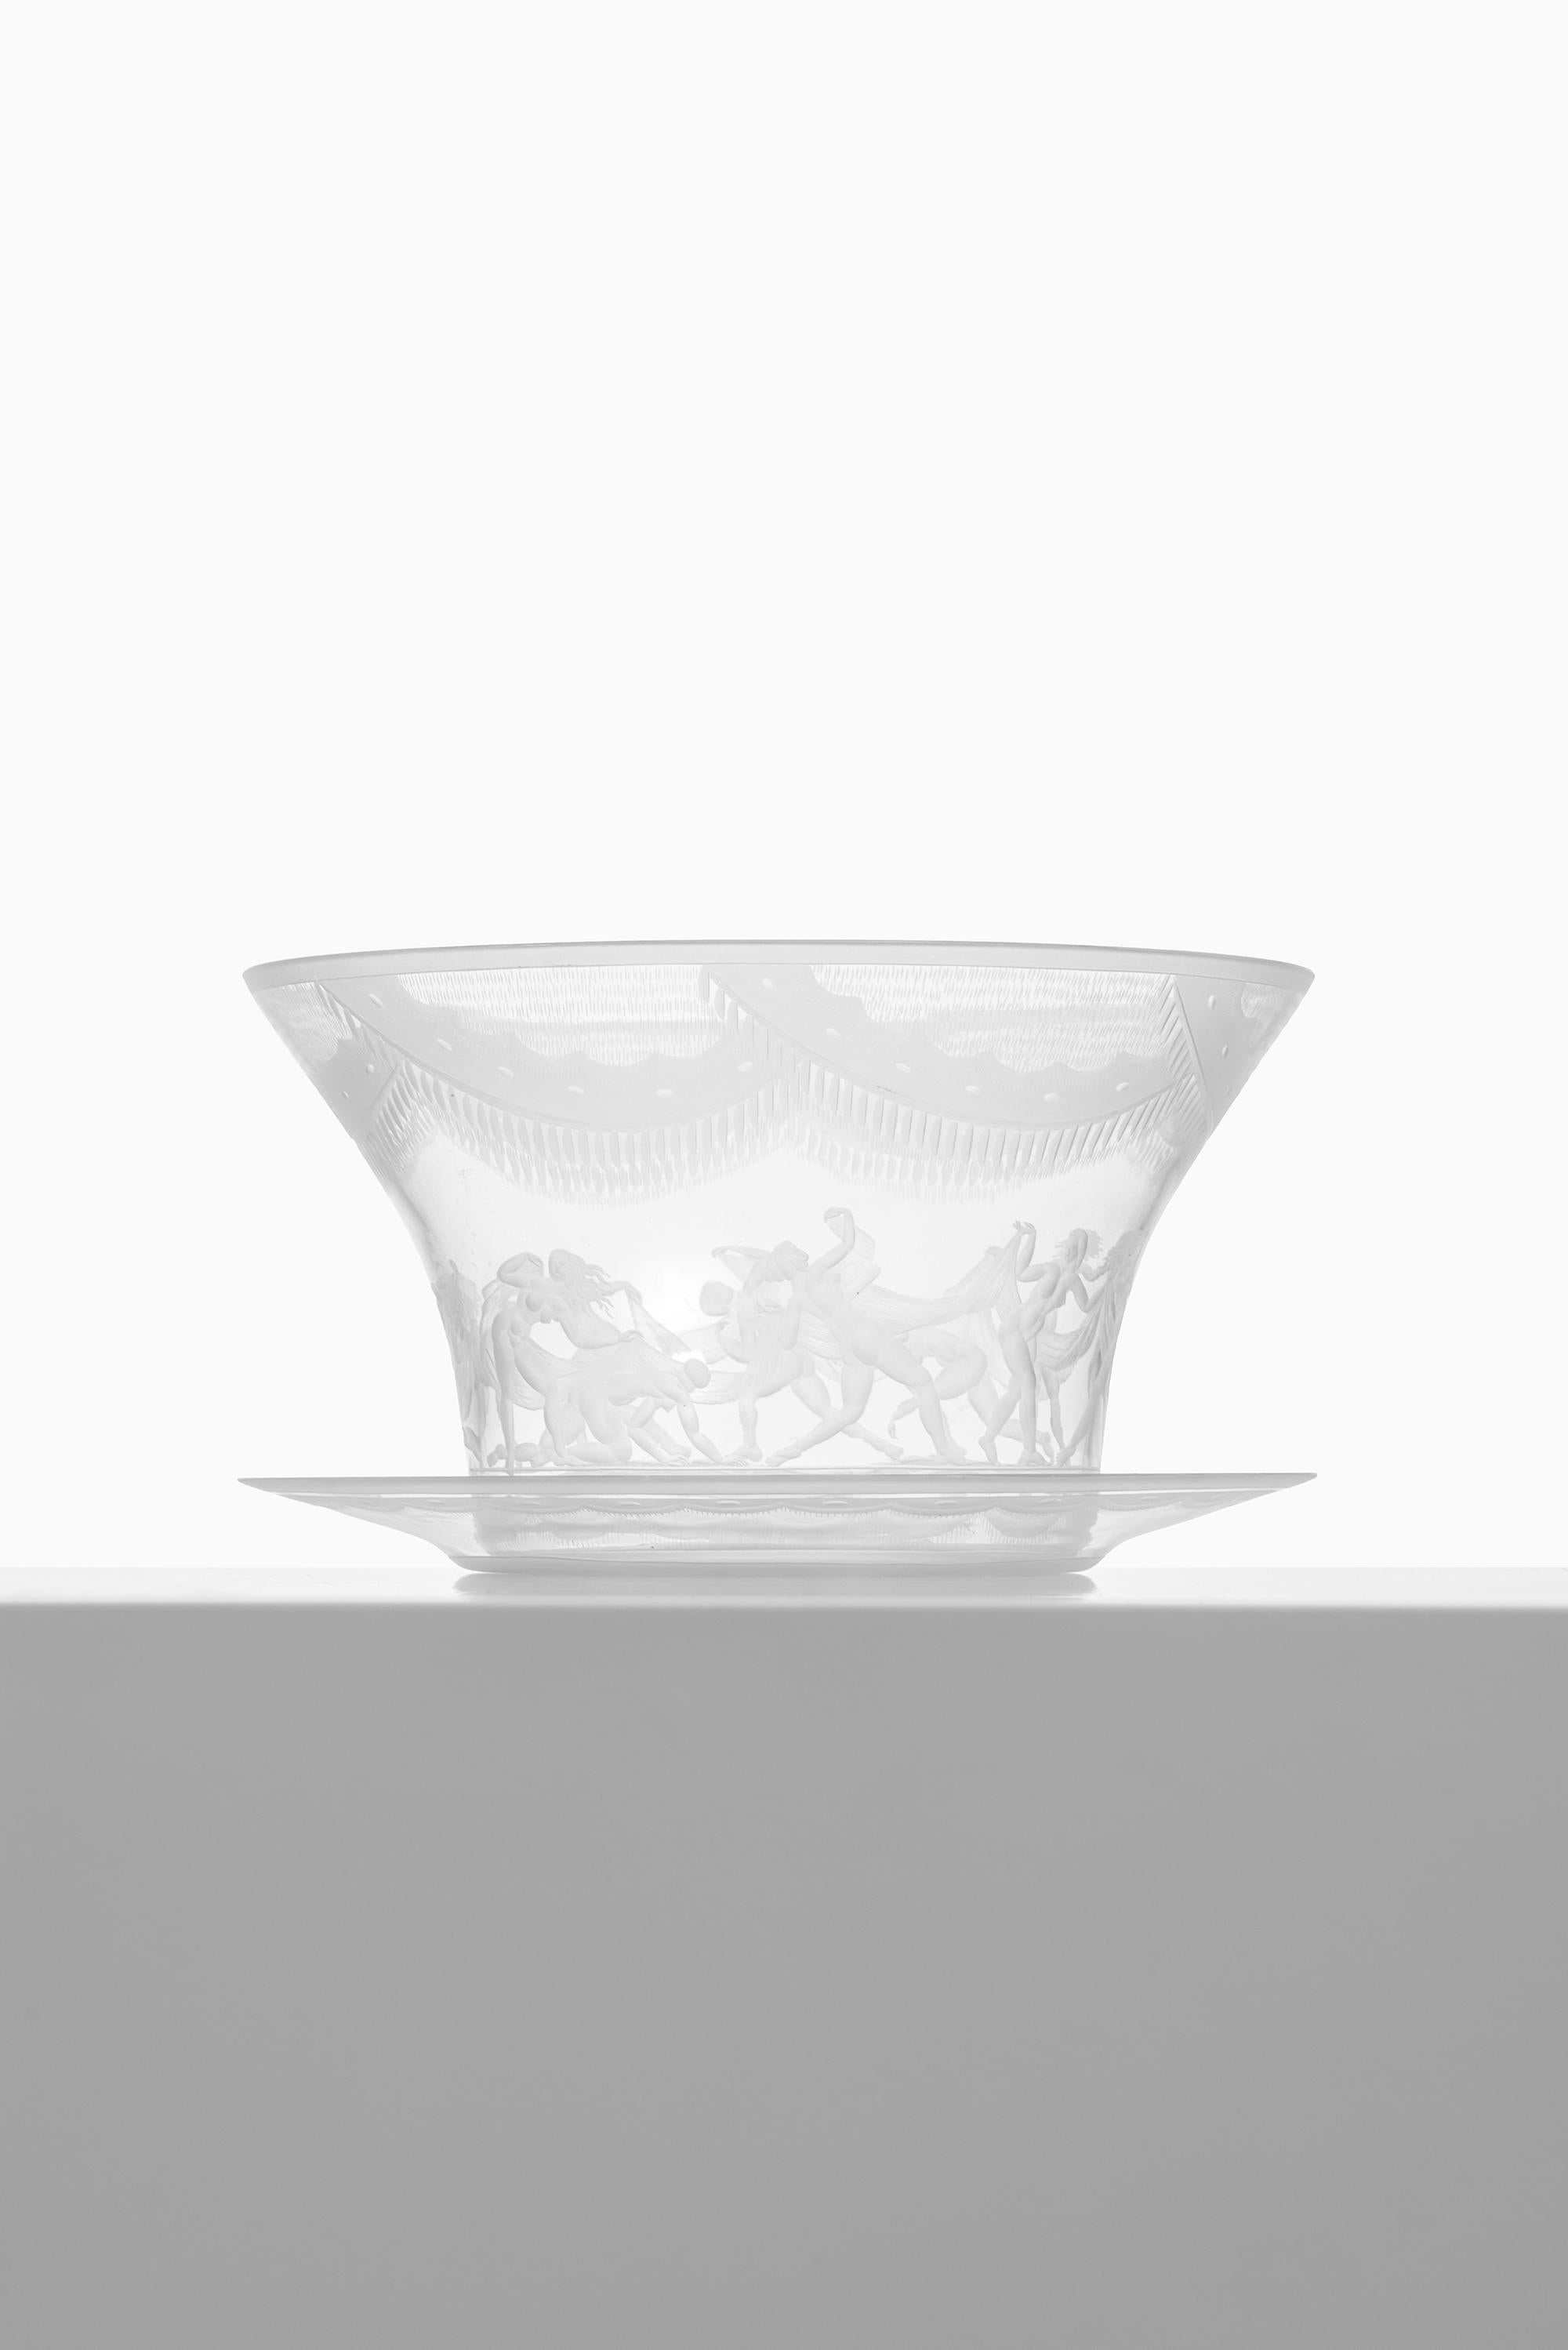 Simon Gate Glass Vase Model Slöjdansen Produced by Orrefors in Sweden In Good Condition For Sale In Limhamn, Skåne län